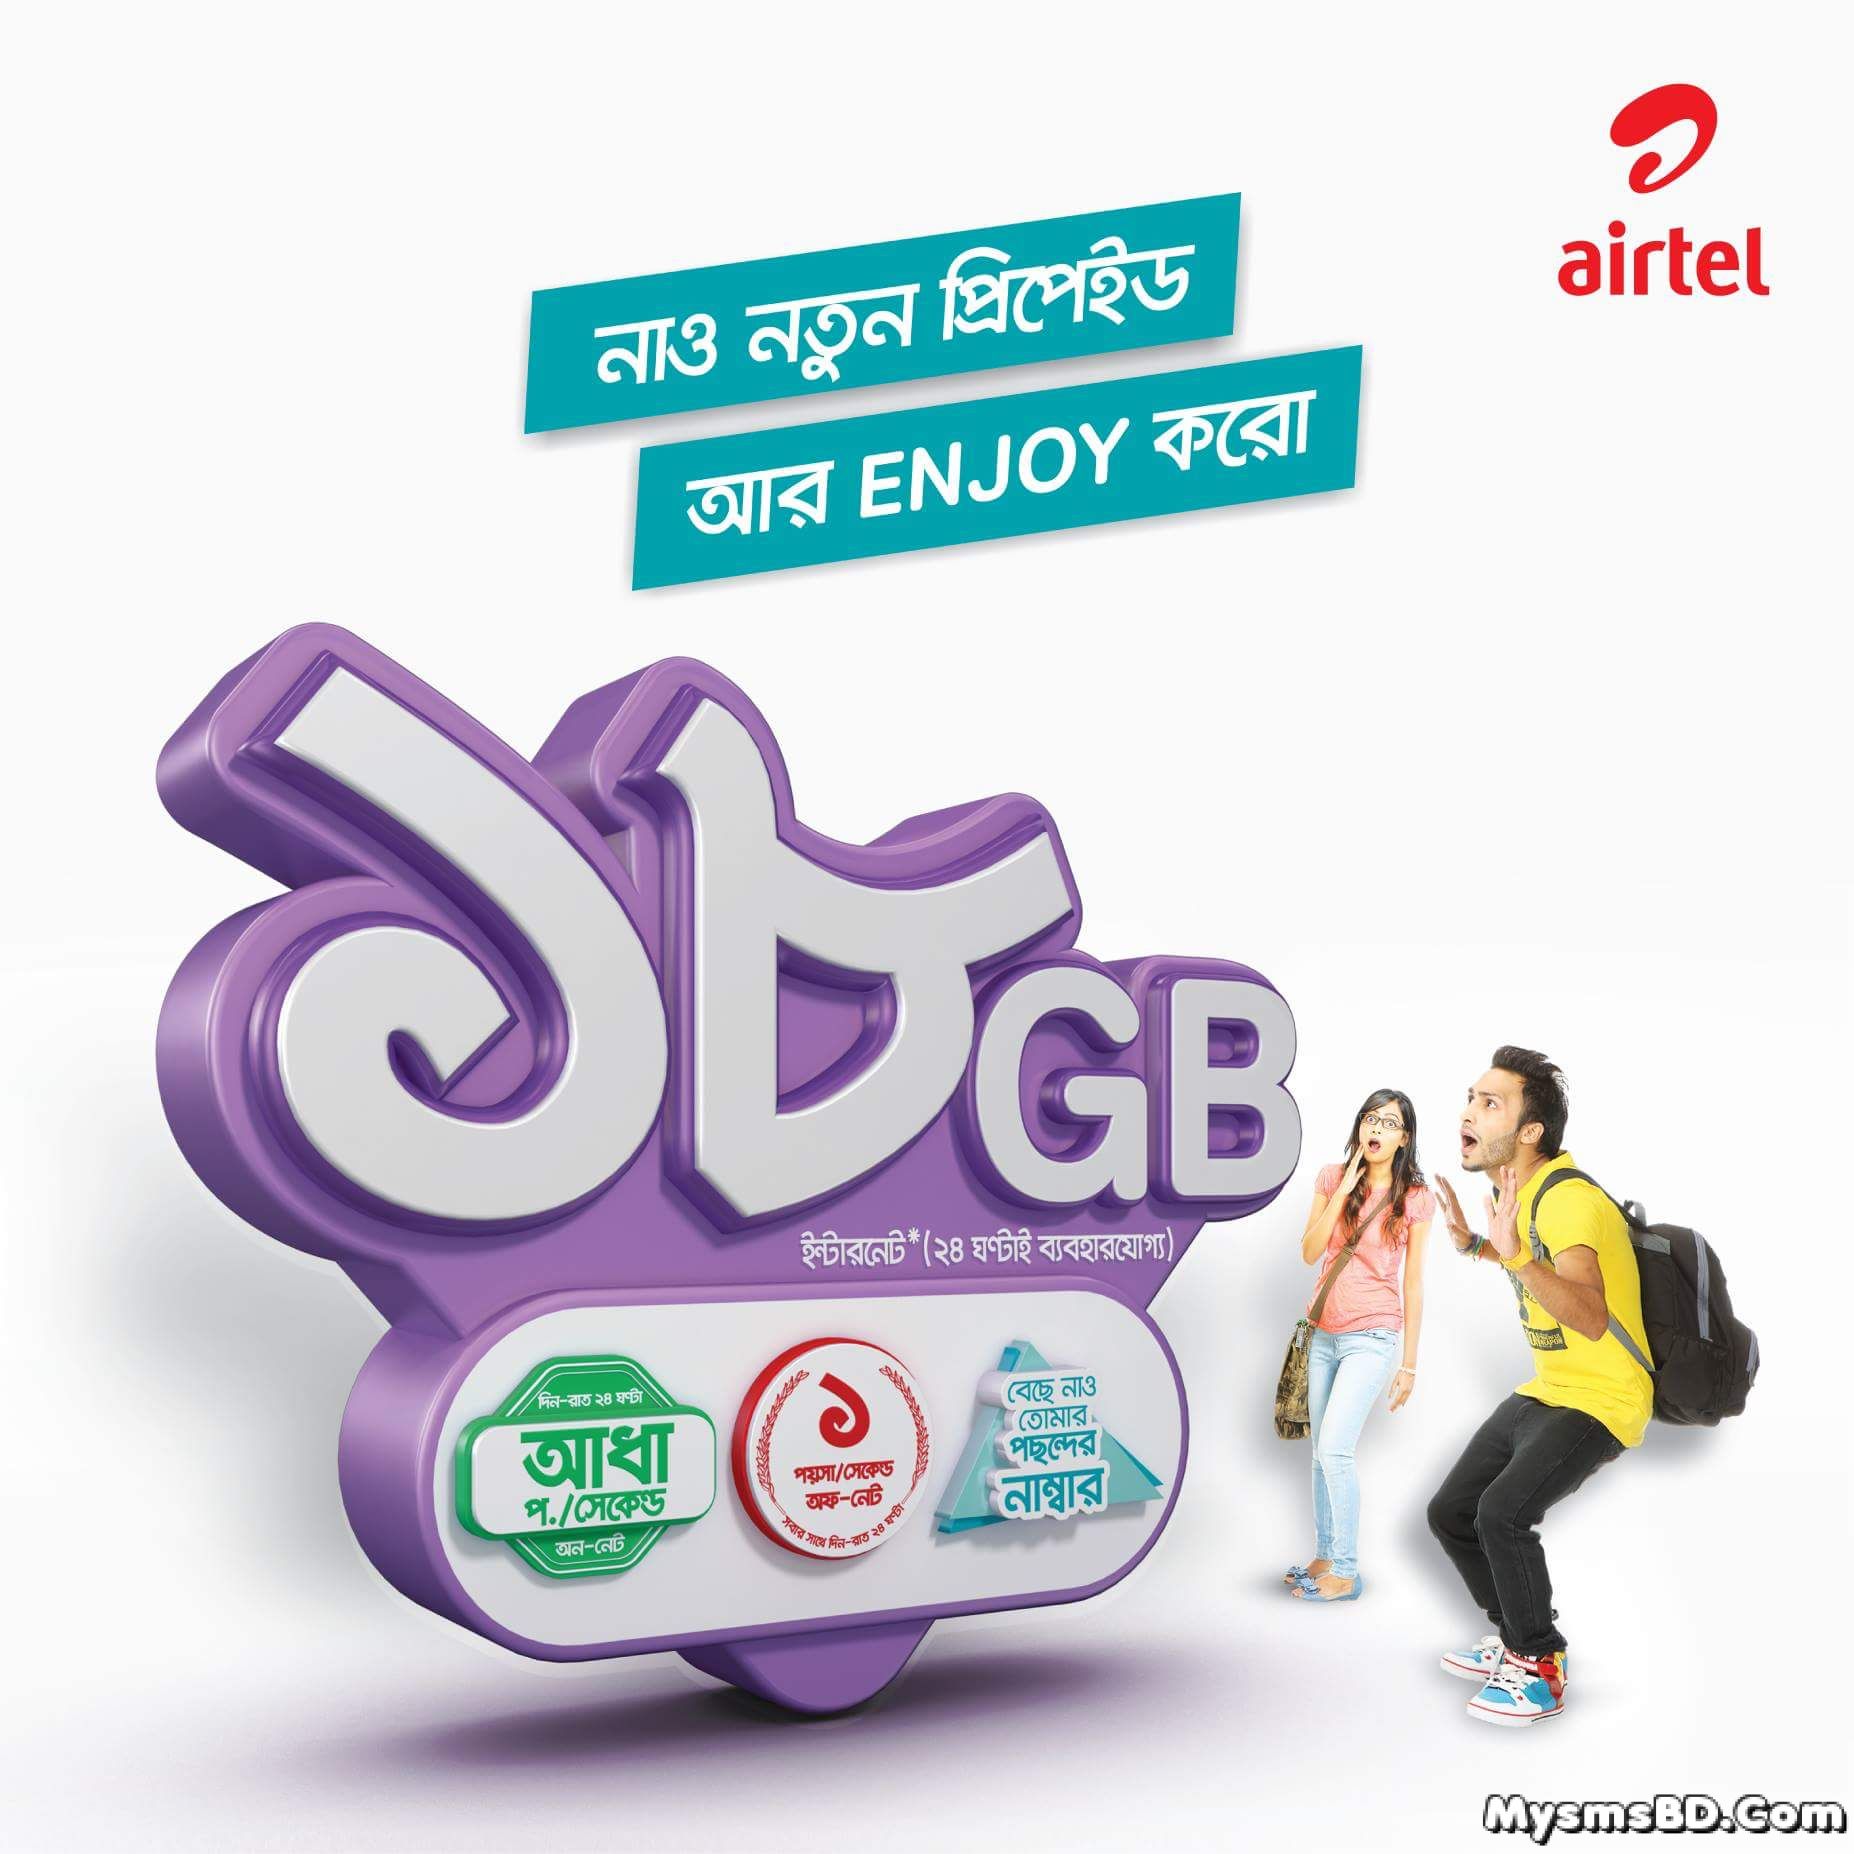 Airtel NEW Sim Offer With Upto 18GB FREE Internet Data